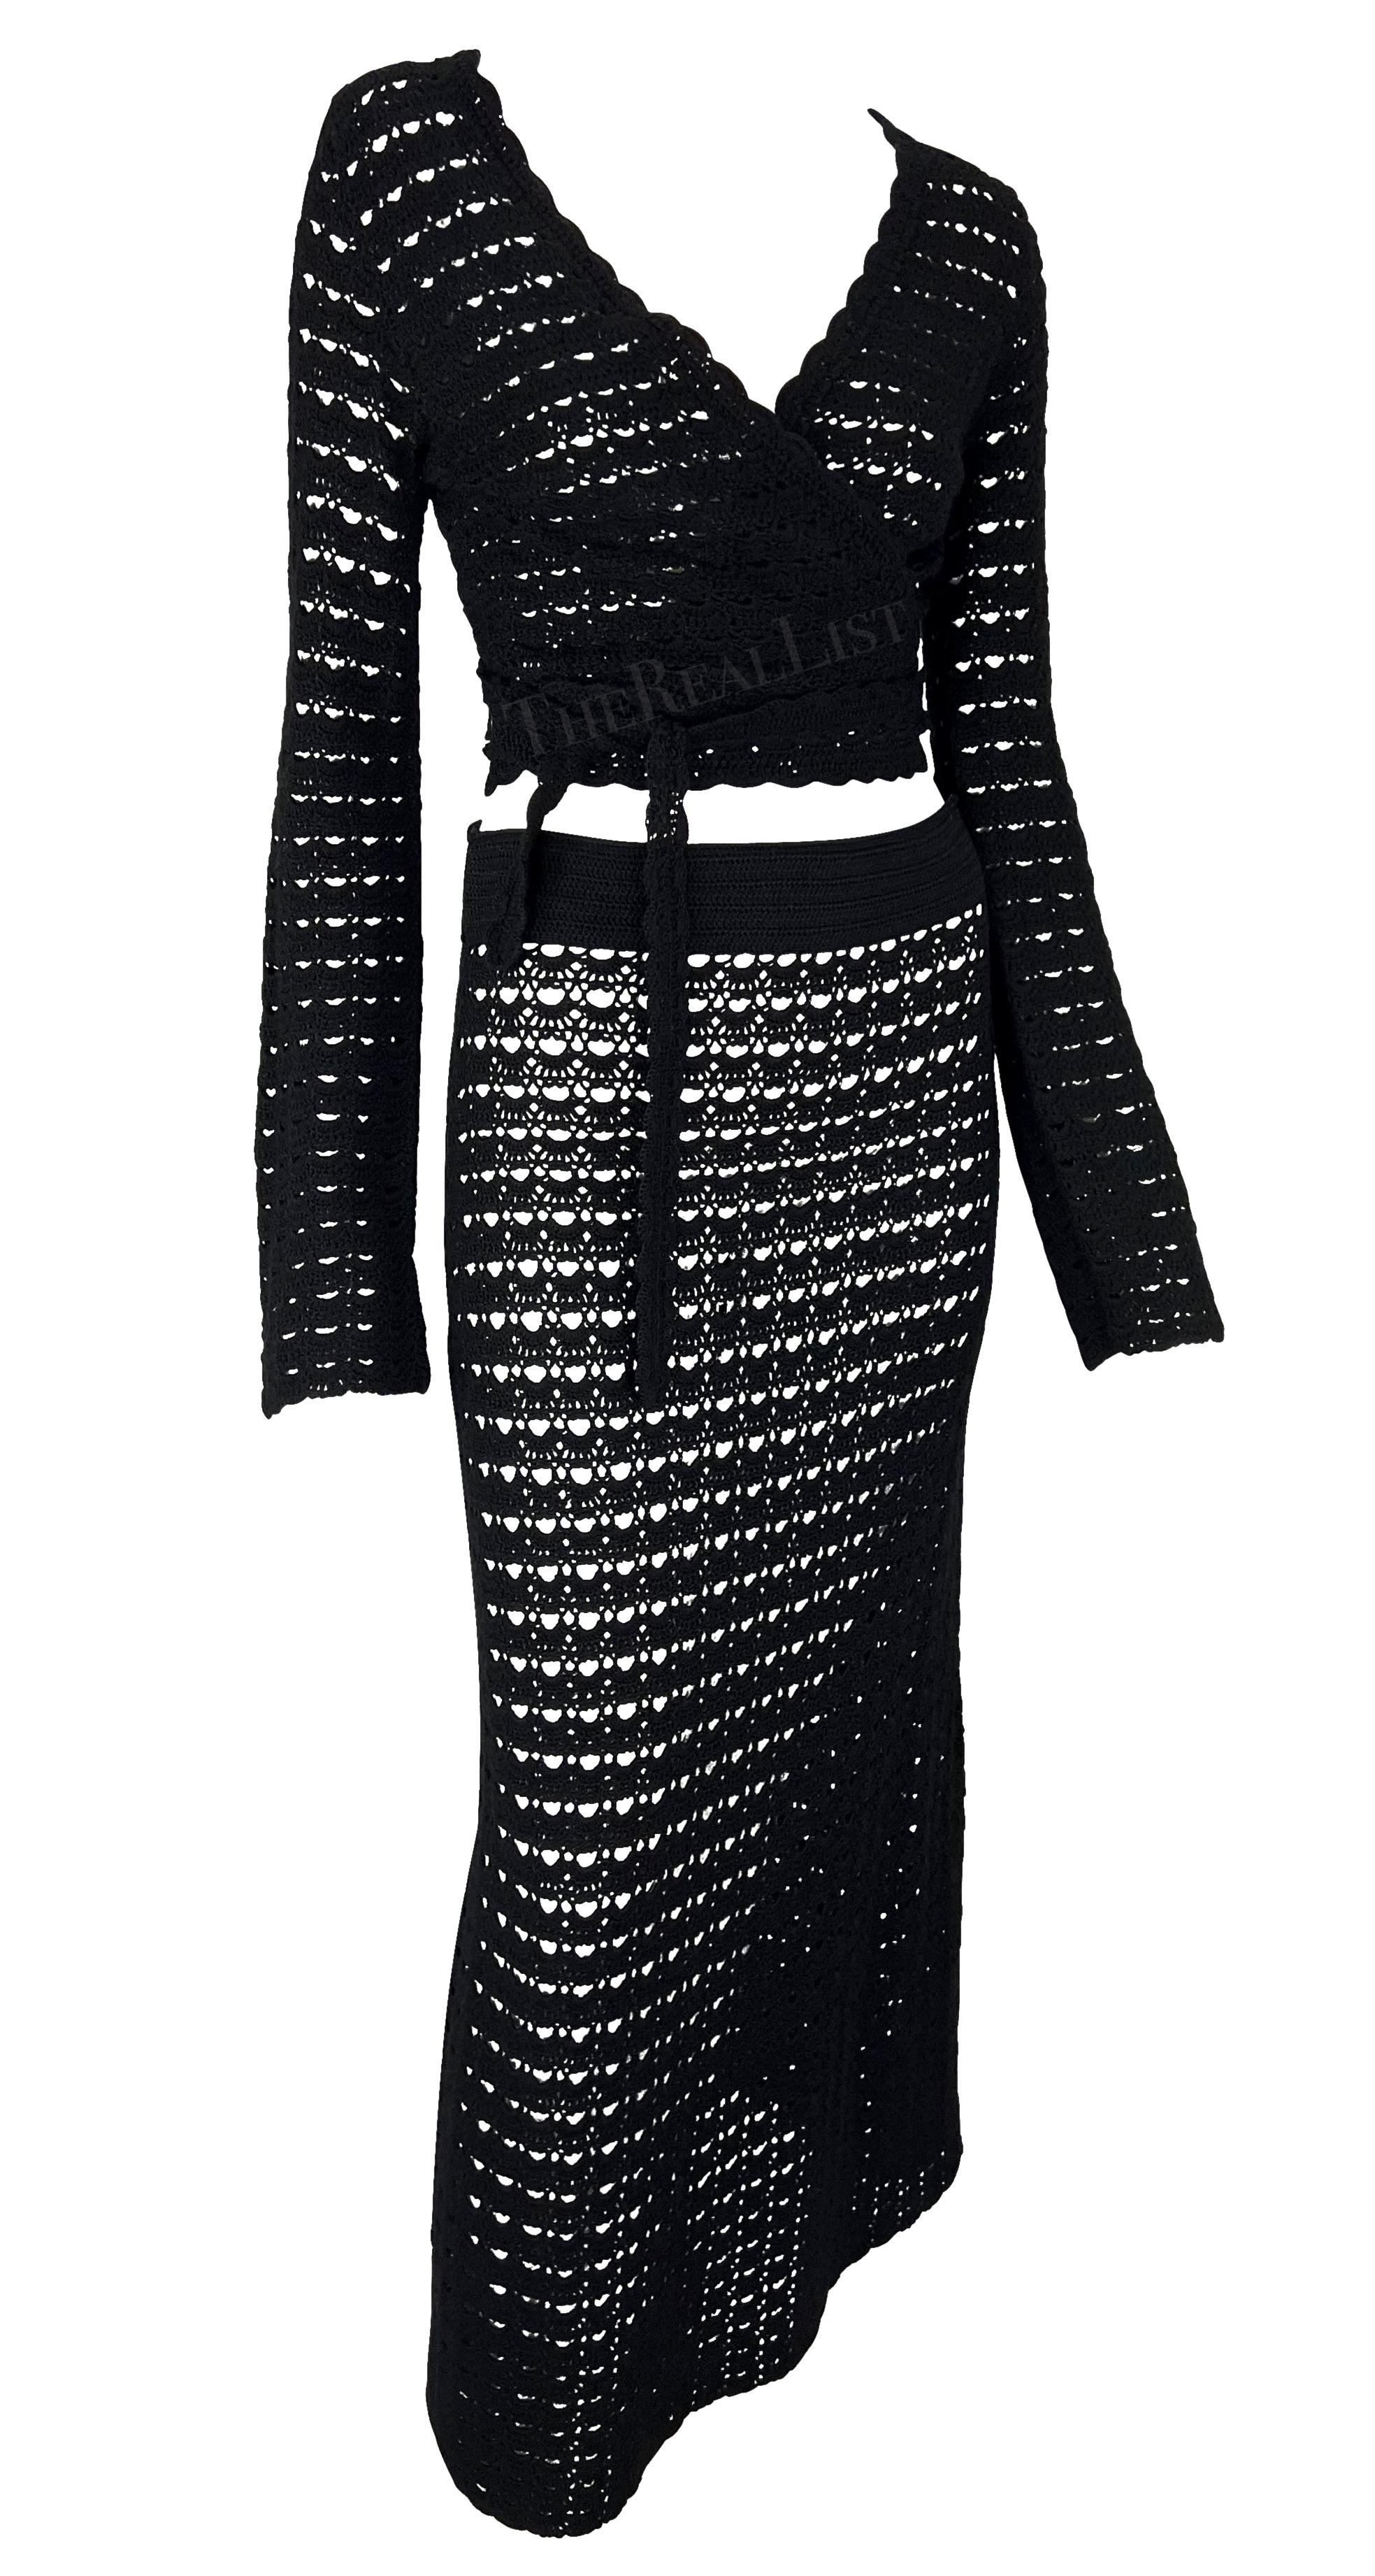 S/S 1997 Dolce & Gabbana Black Knit Crochet Maxi Skirt Wrap Top Skirt Set For Sale 4